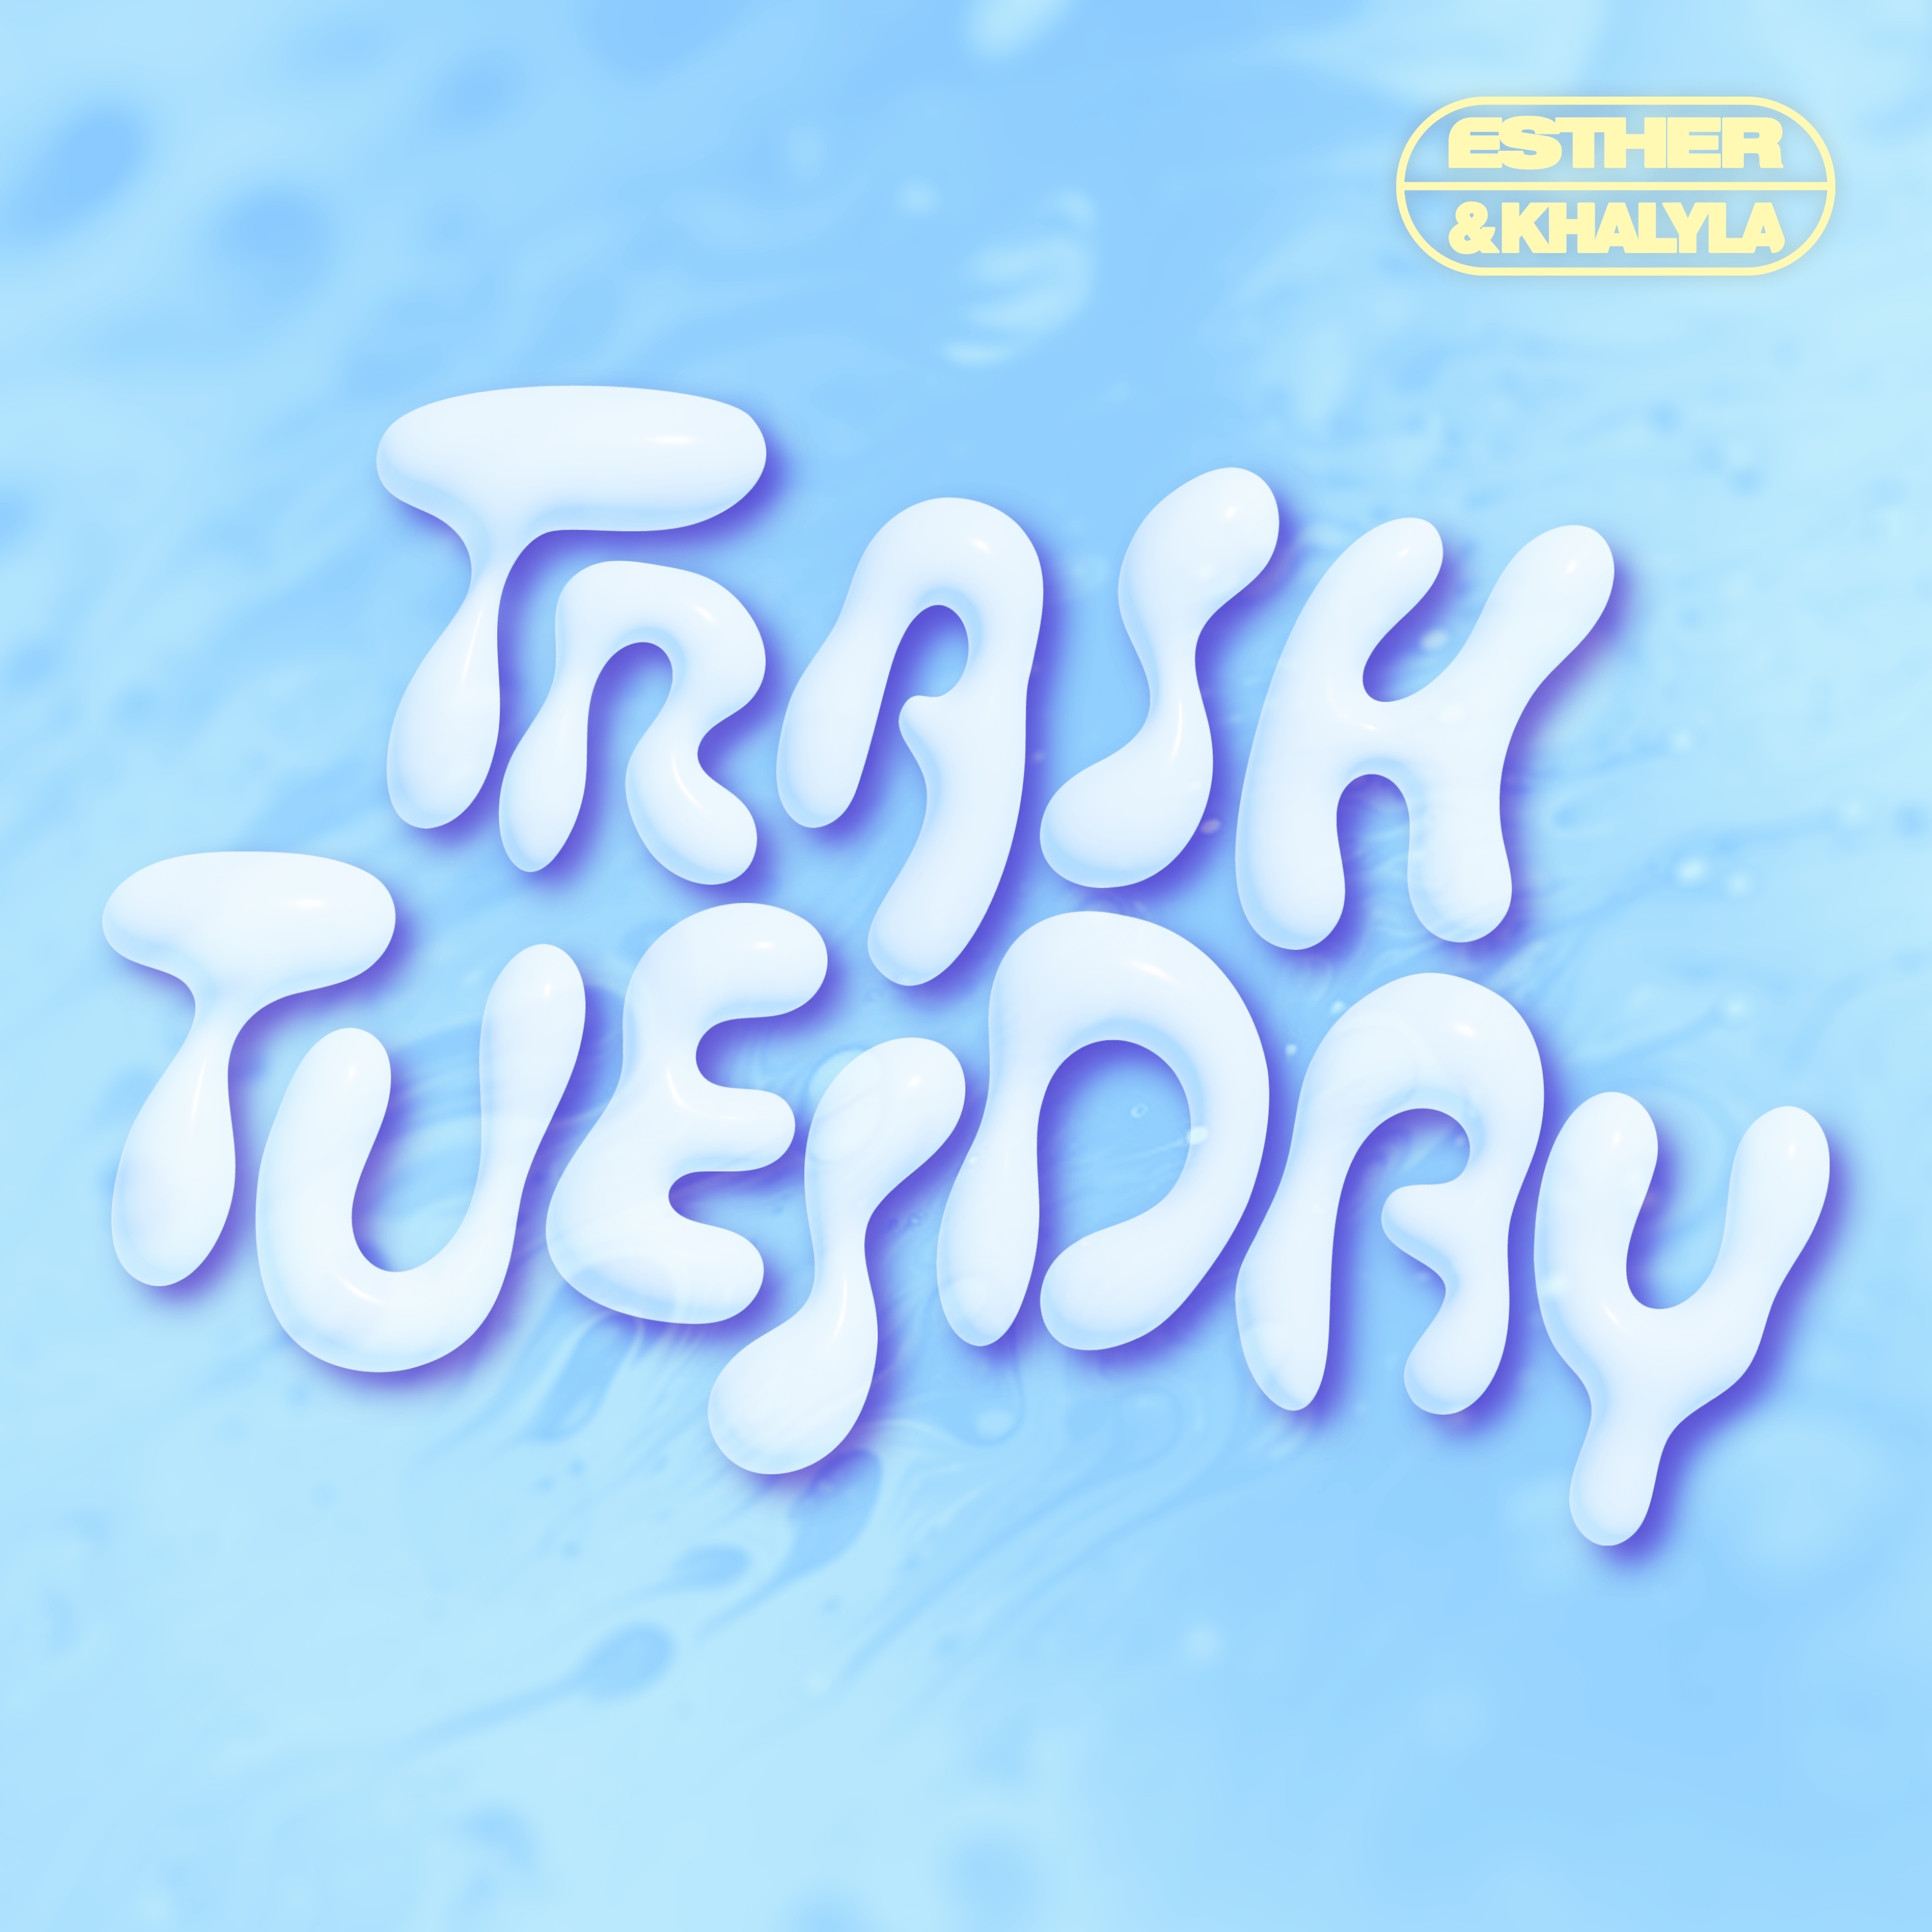 Trash Tuesday w/Esther & Khalyla